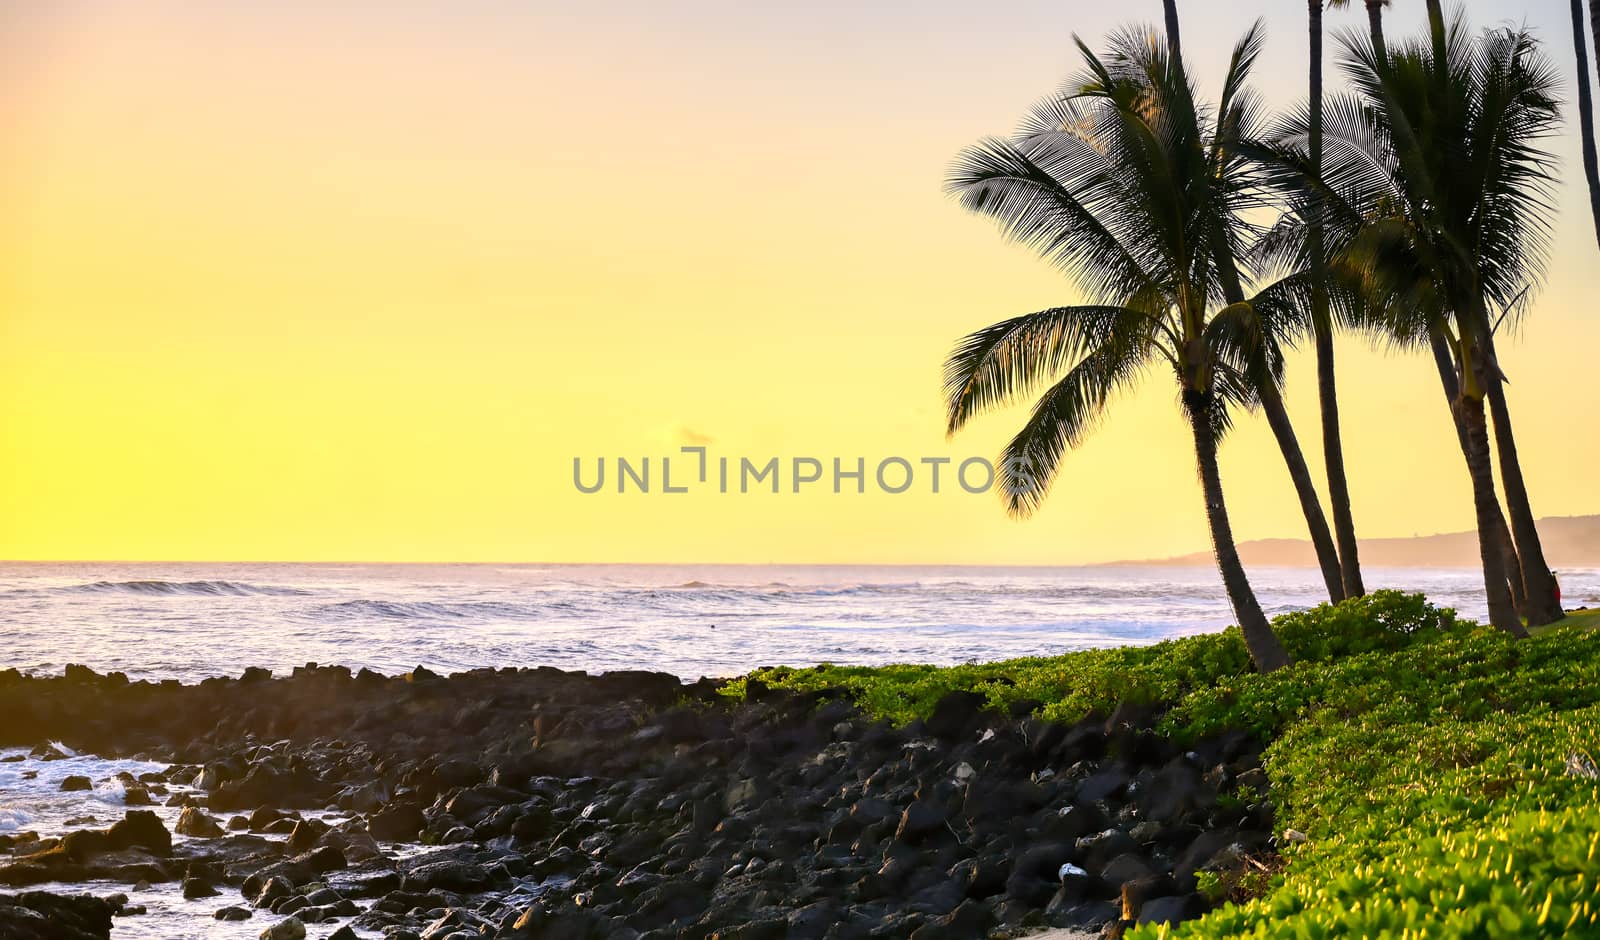 Sunset over the coast of Kauai, Hawaii by jbyard22